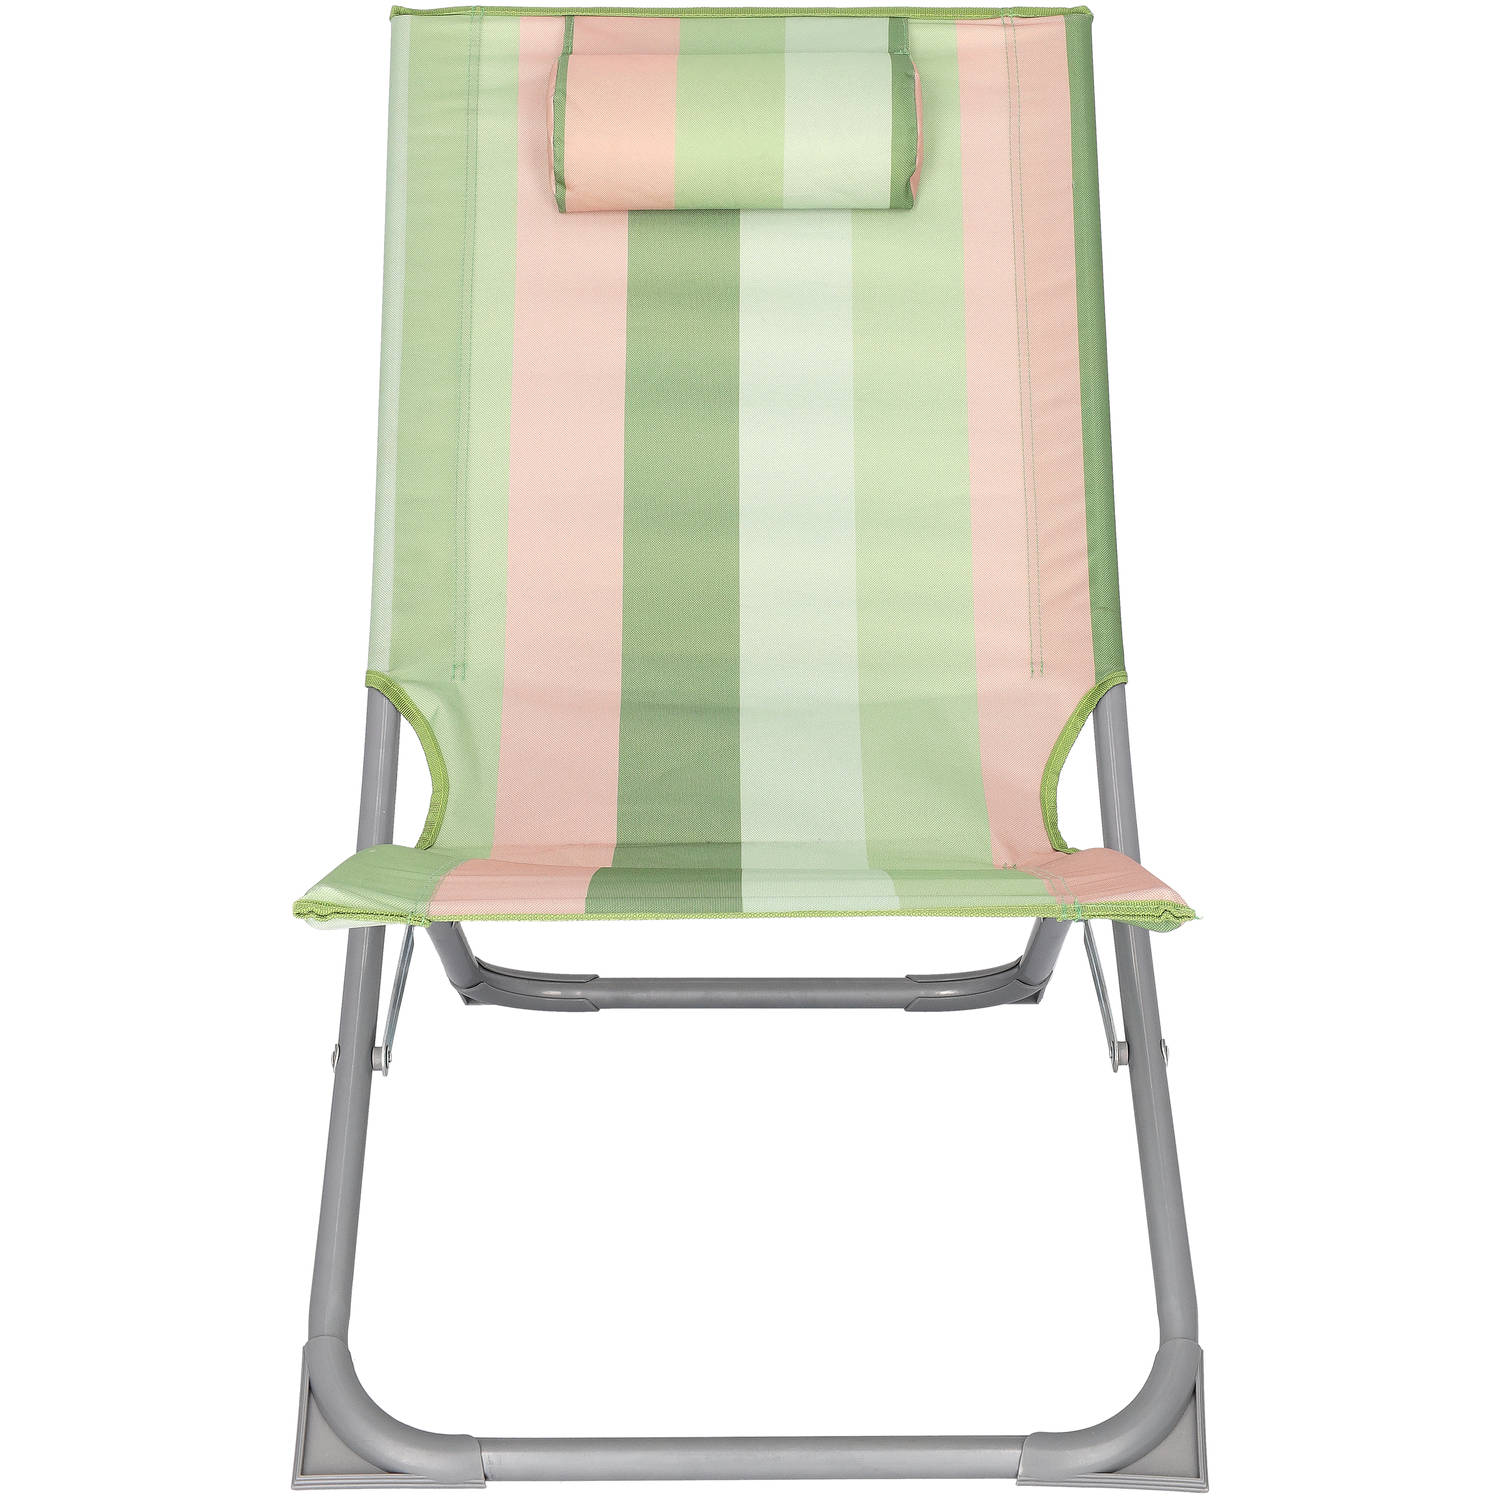 Blokker strandstoel groen-roze